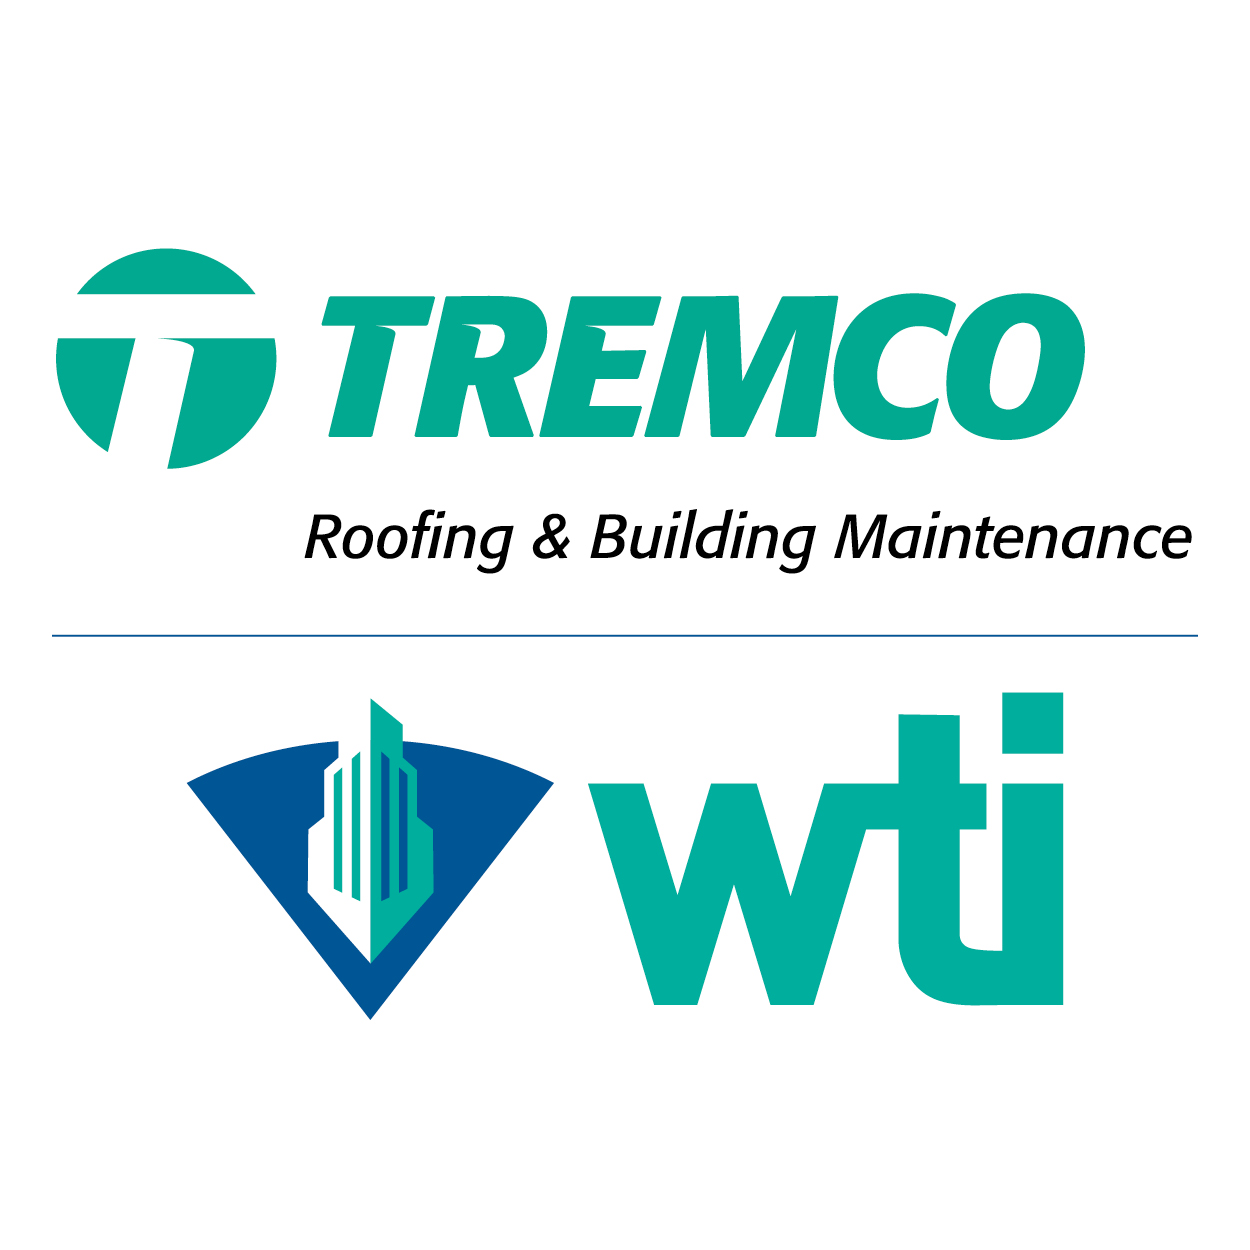 Tremco Roofing & Building Maintenance logo